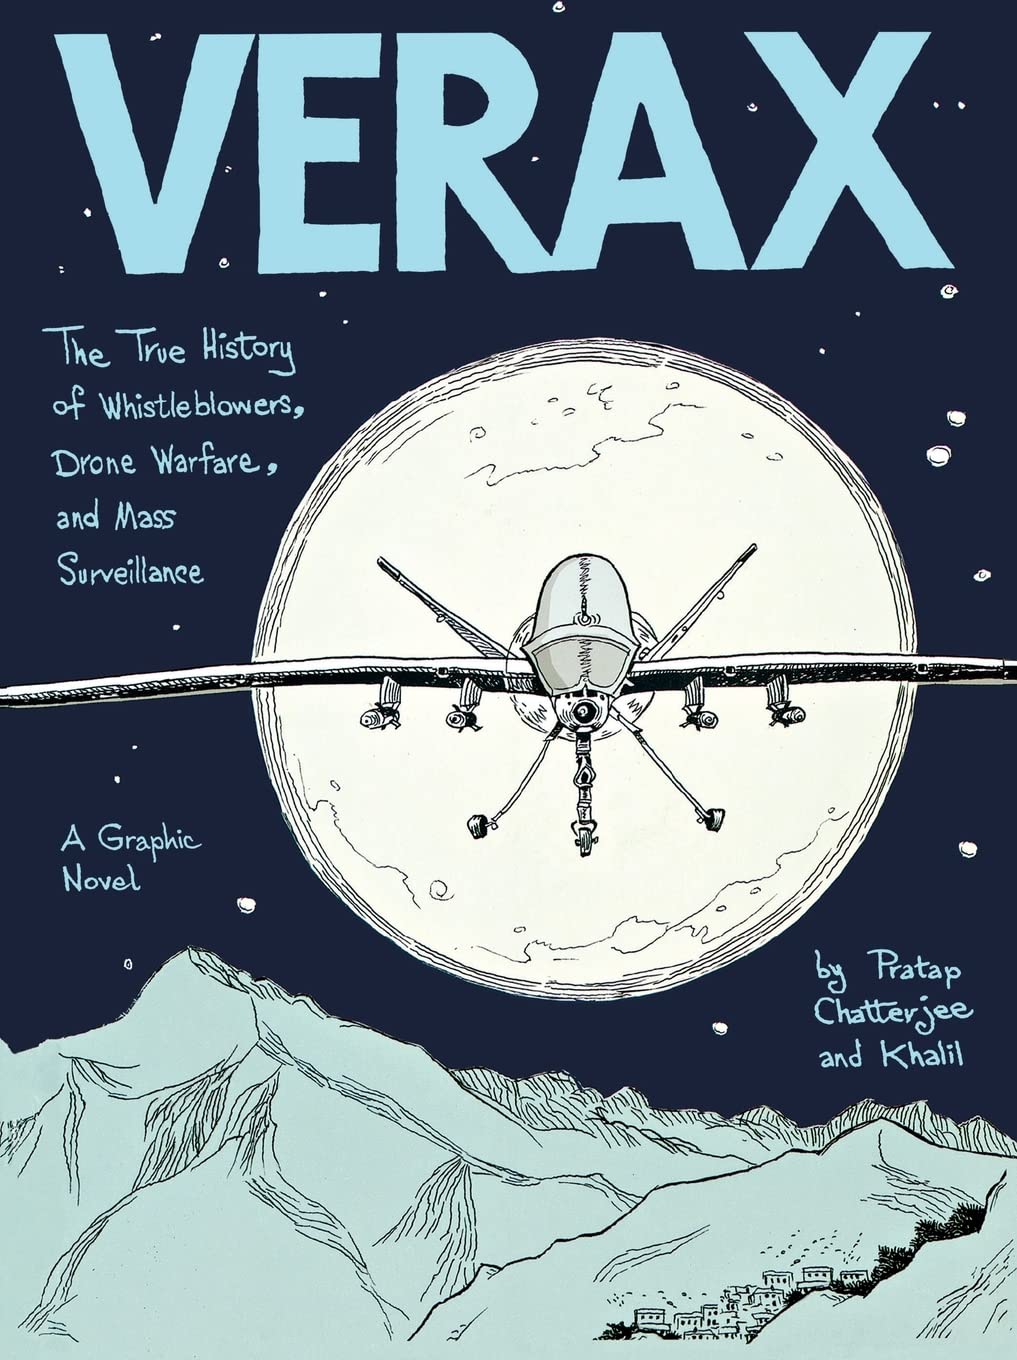 Verax: The True History of Whistleblowers, Drone Warfare, and Mass Surveillance